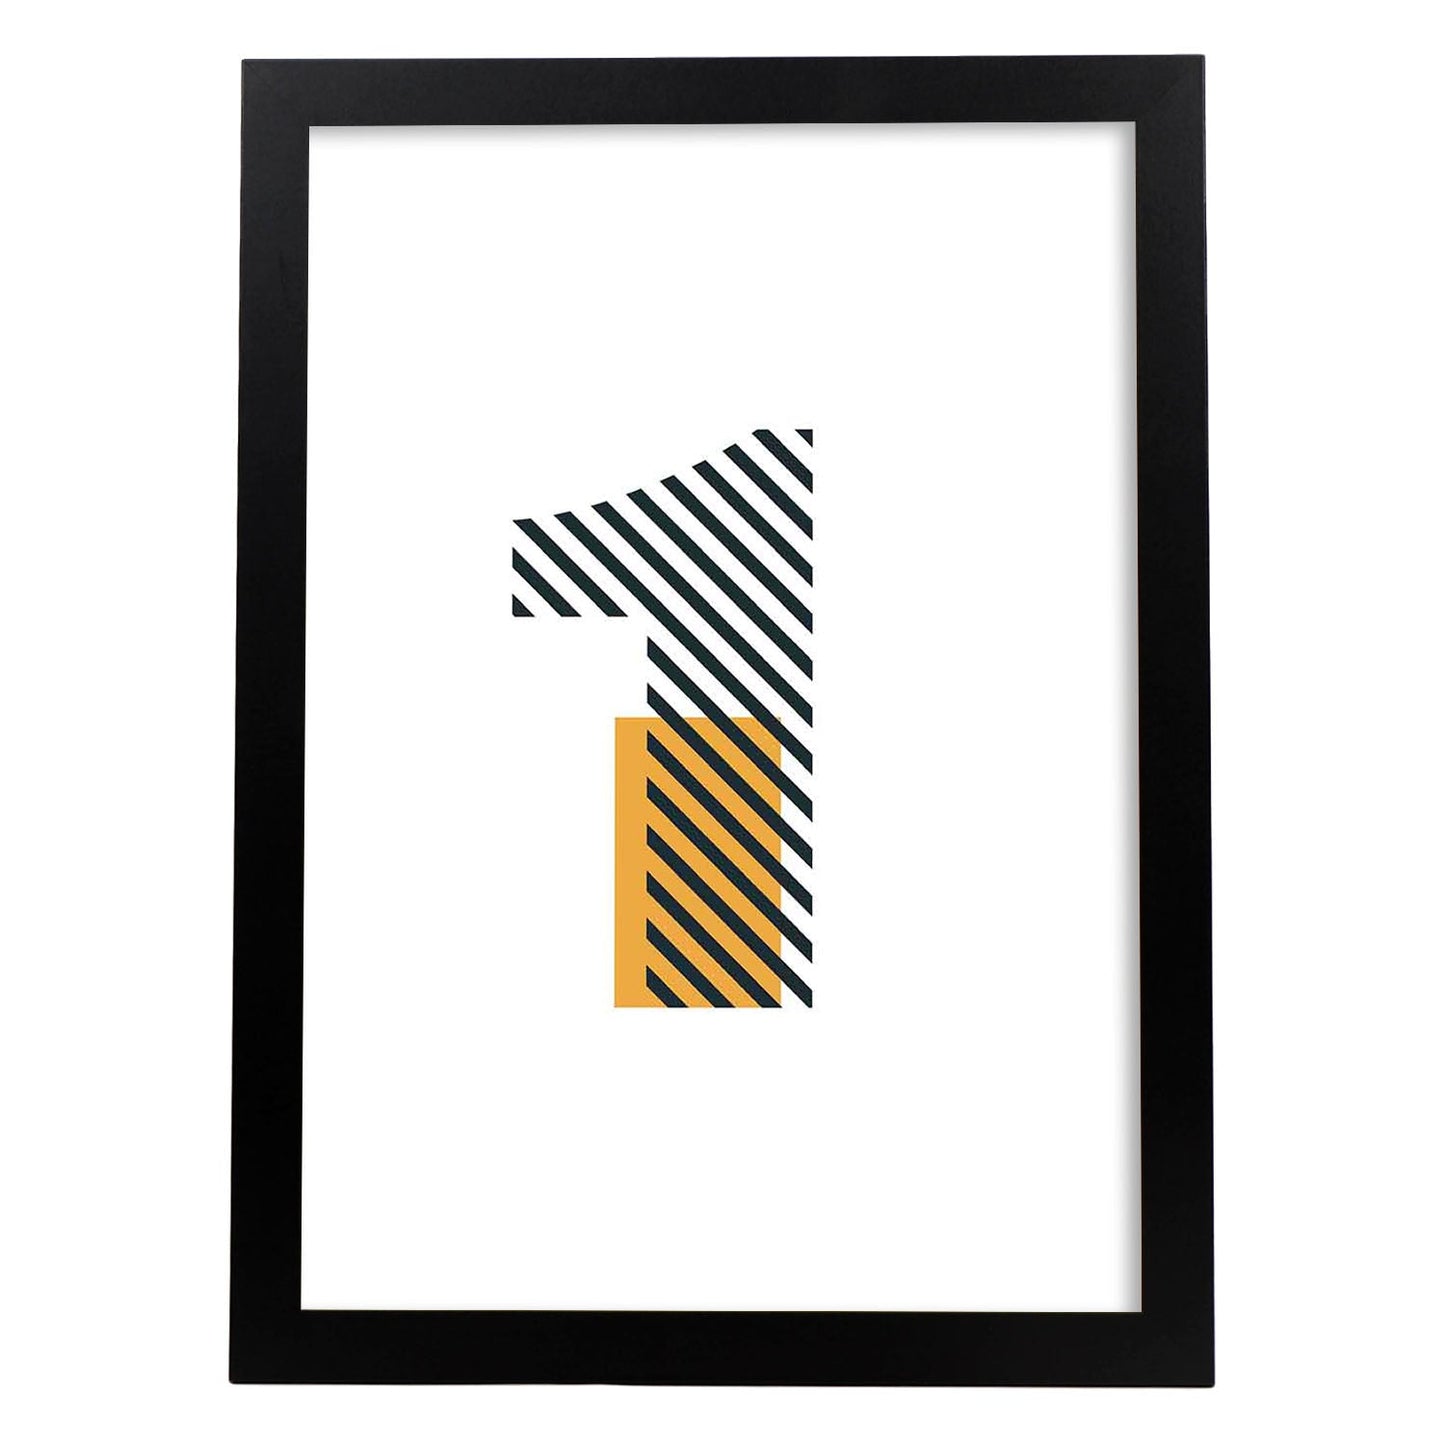 Poster de número 1. Lámina estilo Geometria con imágenes del alfabeto.-Artwork-Nacnic-A4-Marco Negro-Nacnic Estudio SL